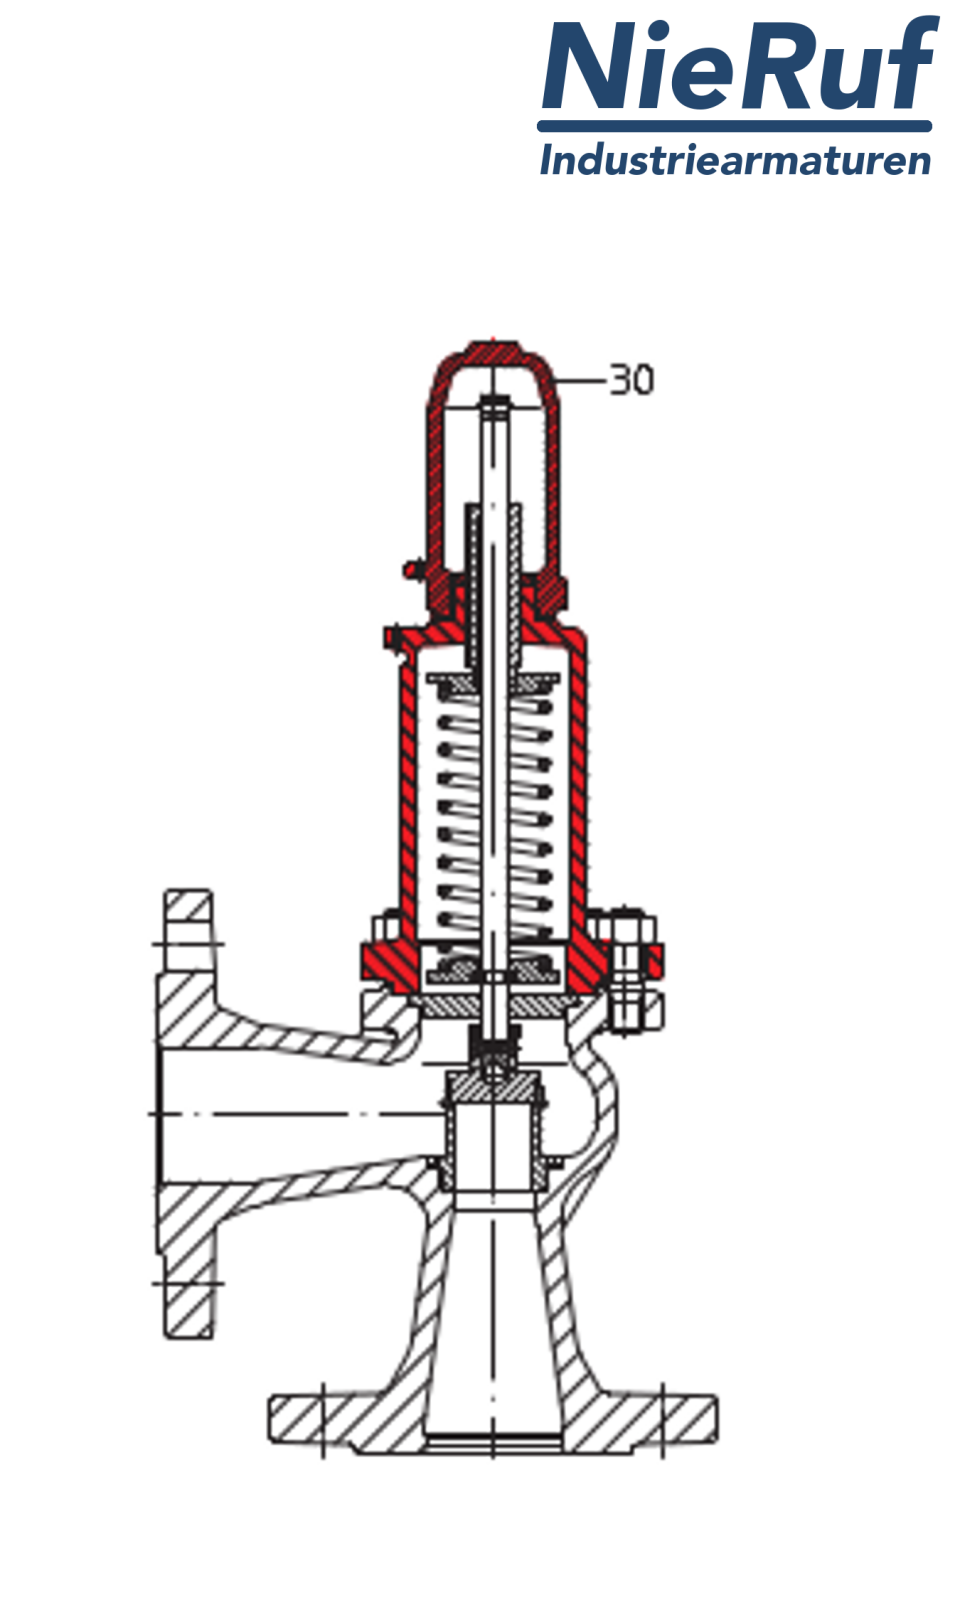 flange-safety valve DN100/DN100 SF0101, cast iron EN-JL1040 FPM, without lever